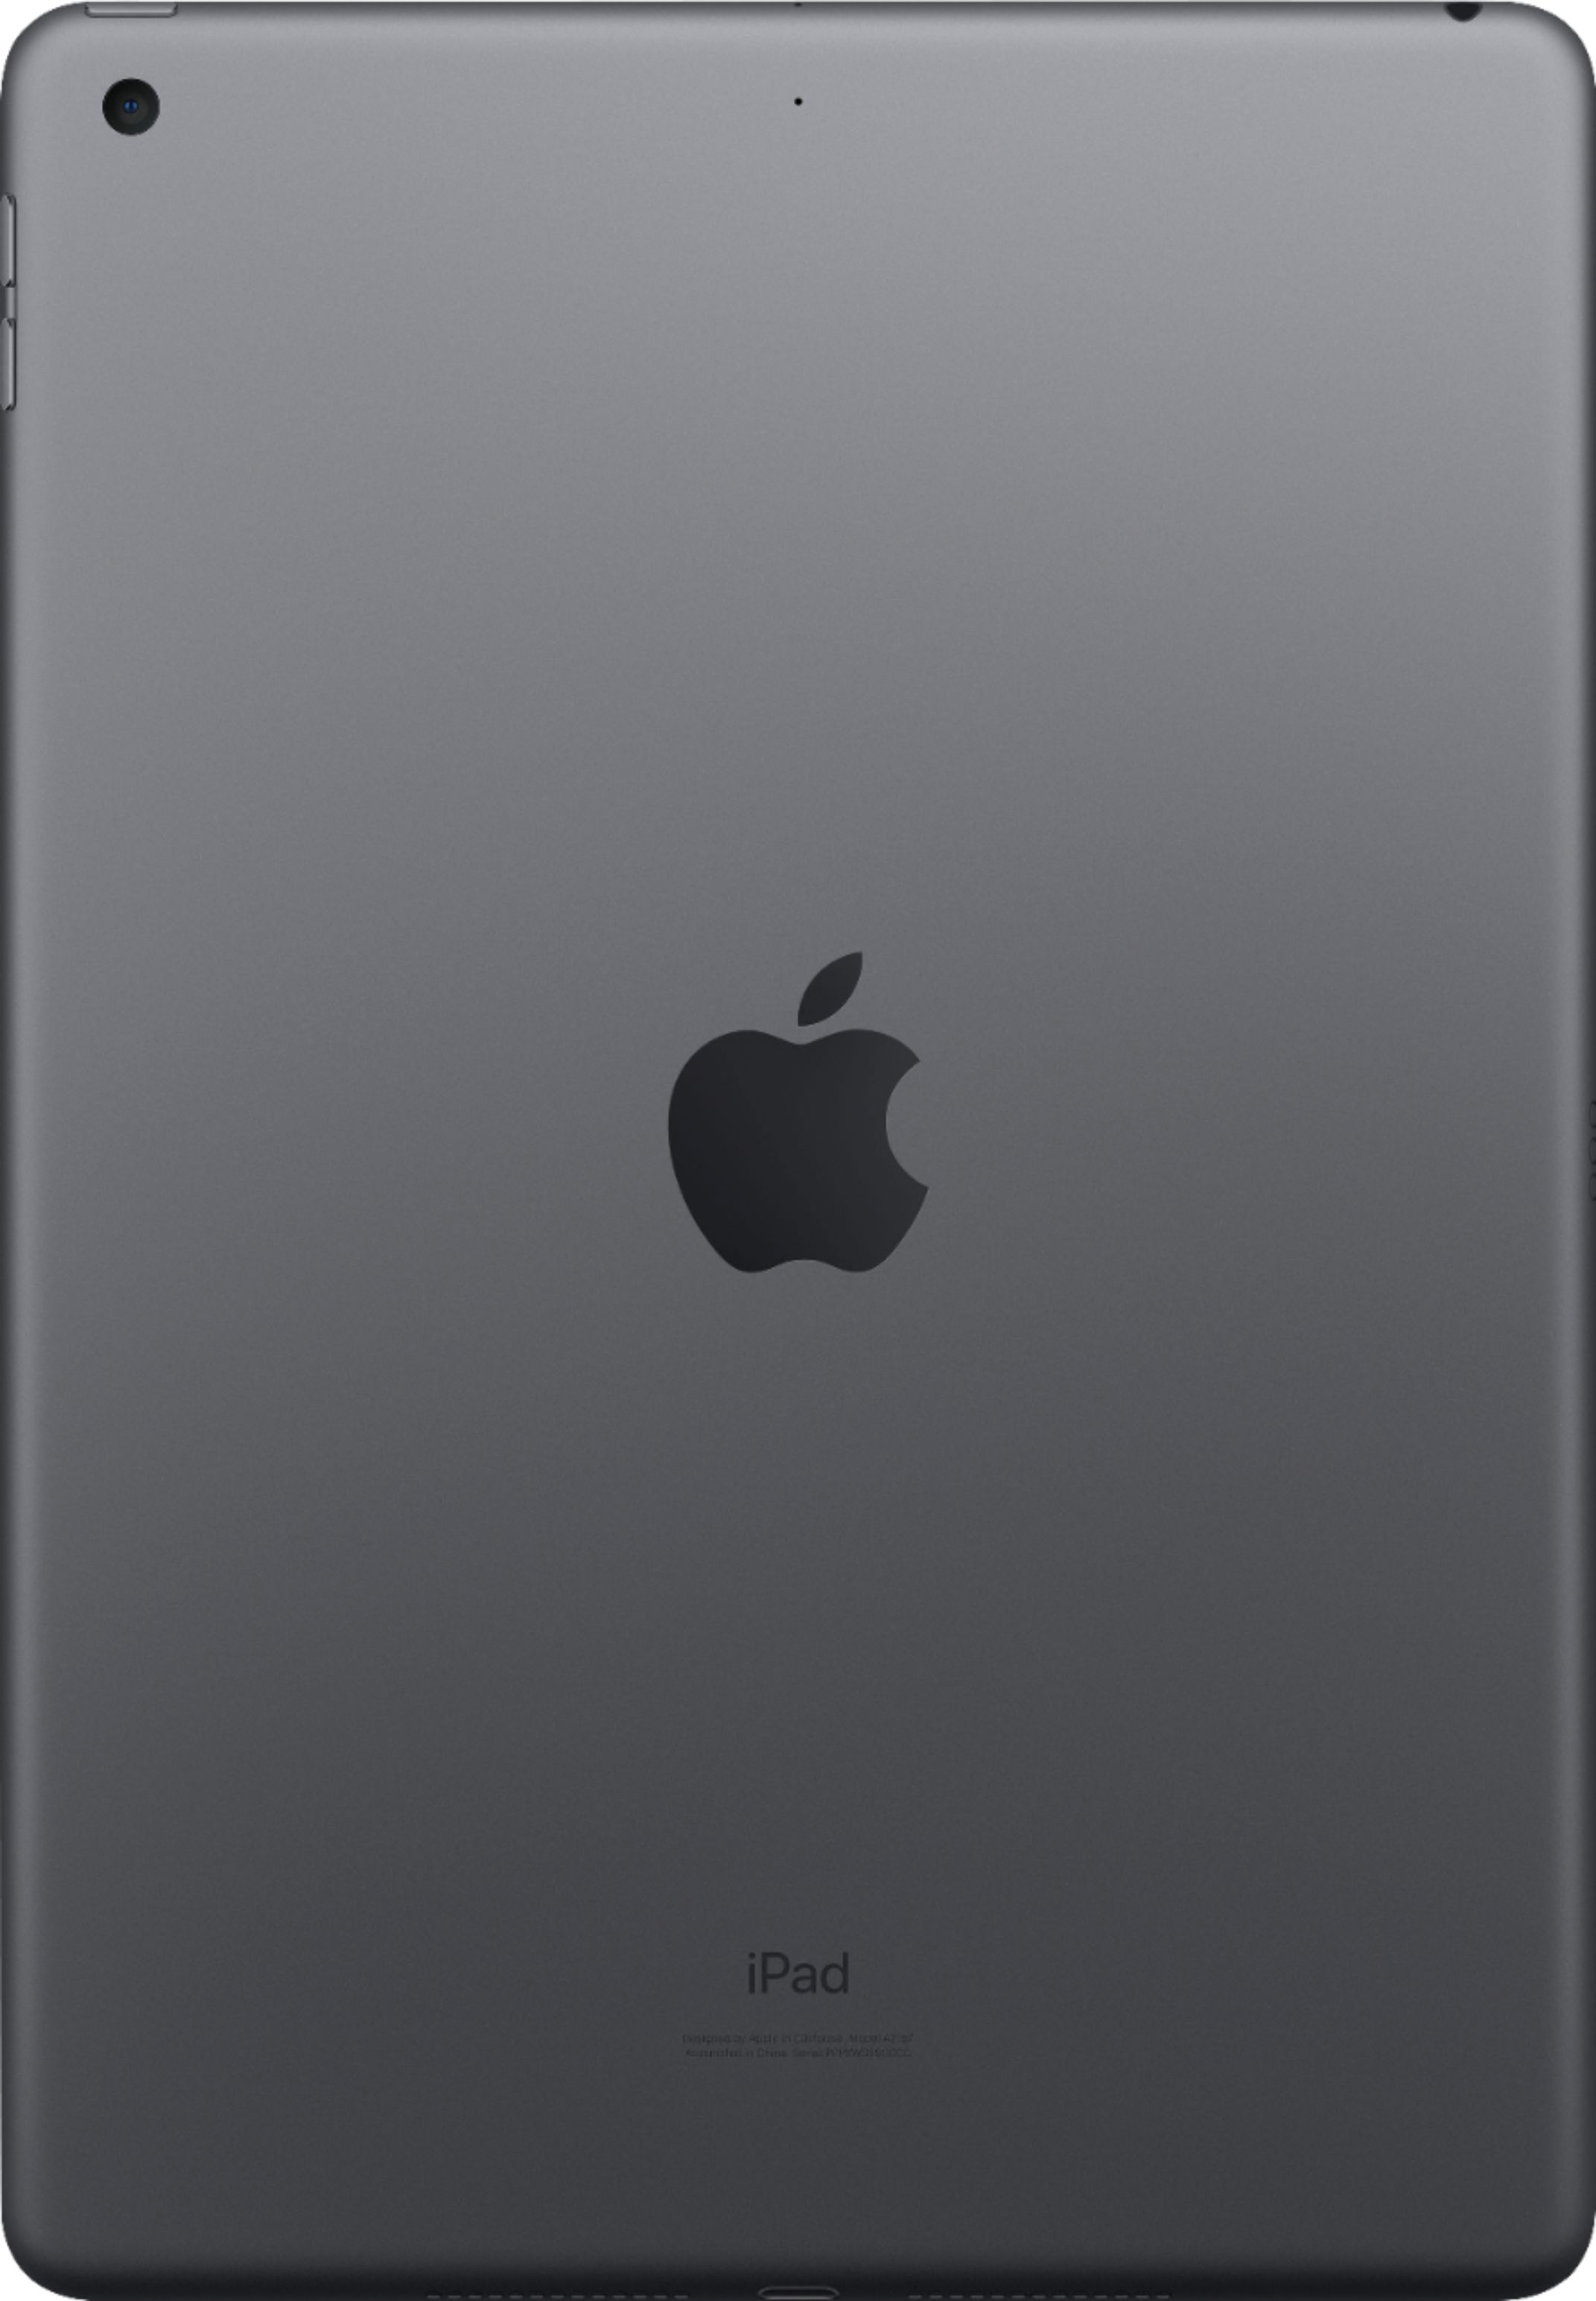  Apple iPad (10.2-inch, Wi-Fi, 128GB, 8th Generation